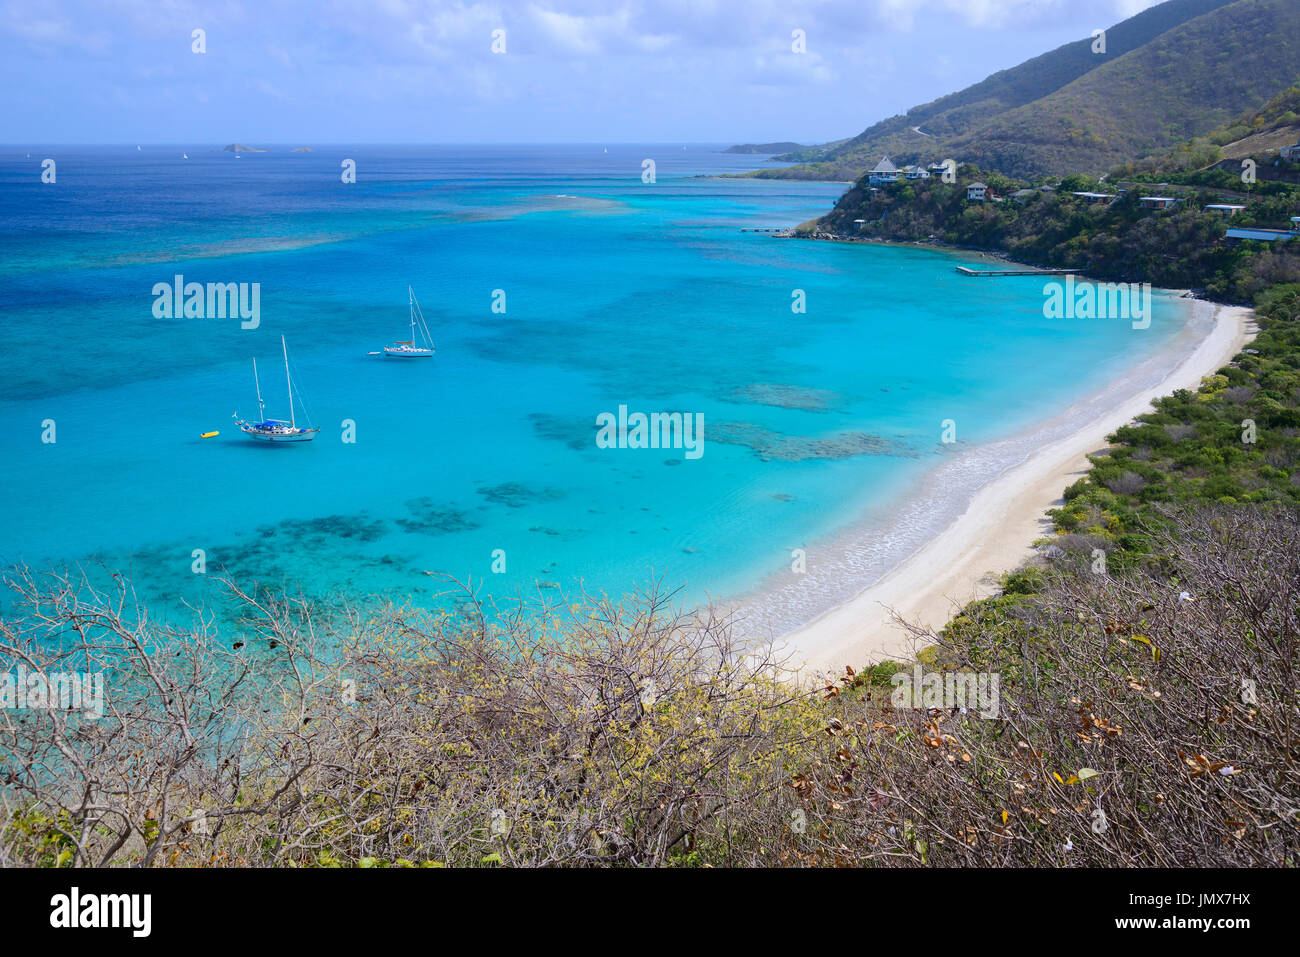 Sandy Beach of Savannah Bay with vegetation on hill, Savannah Bay, British Virgin Islands, Caribbean Sea Stock Photo